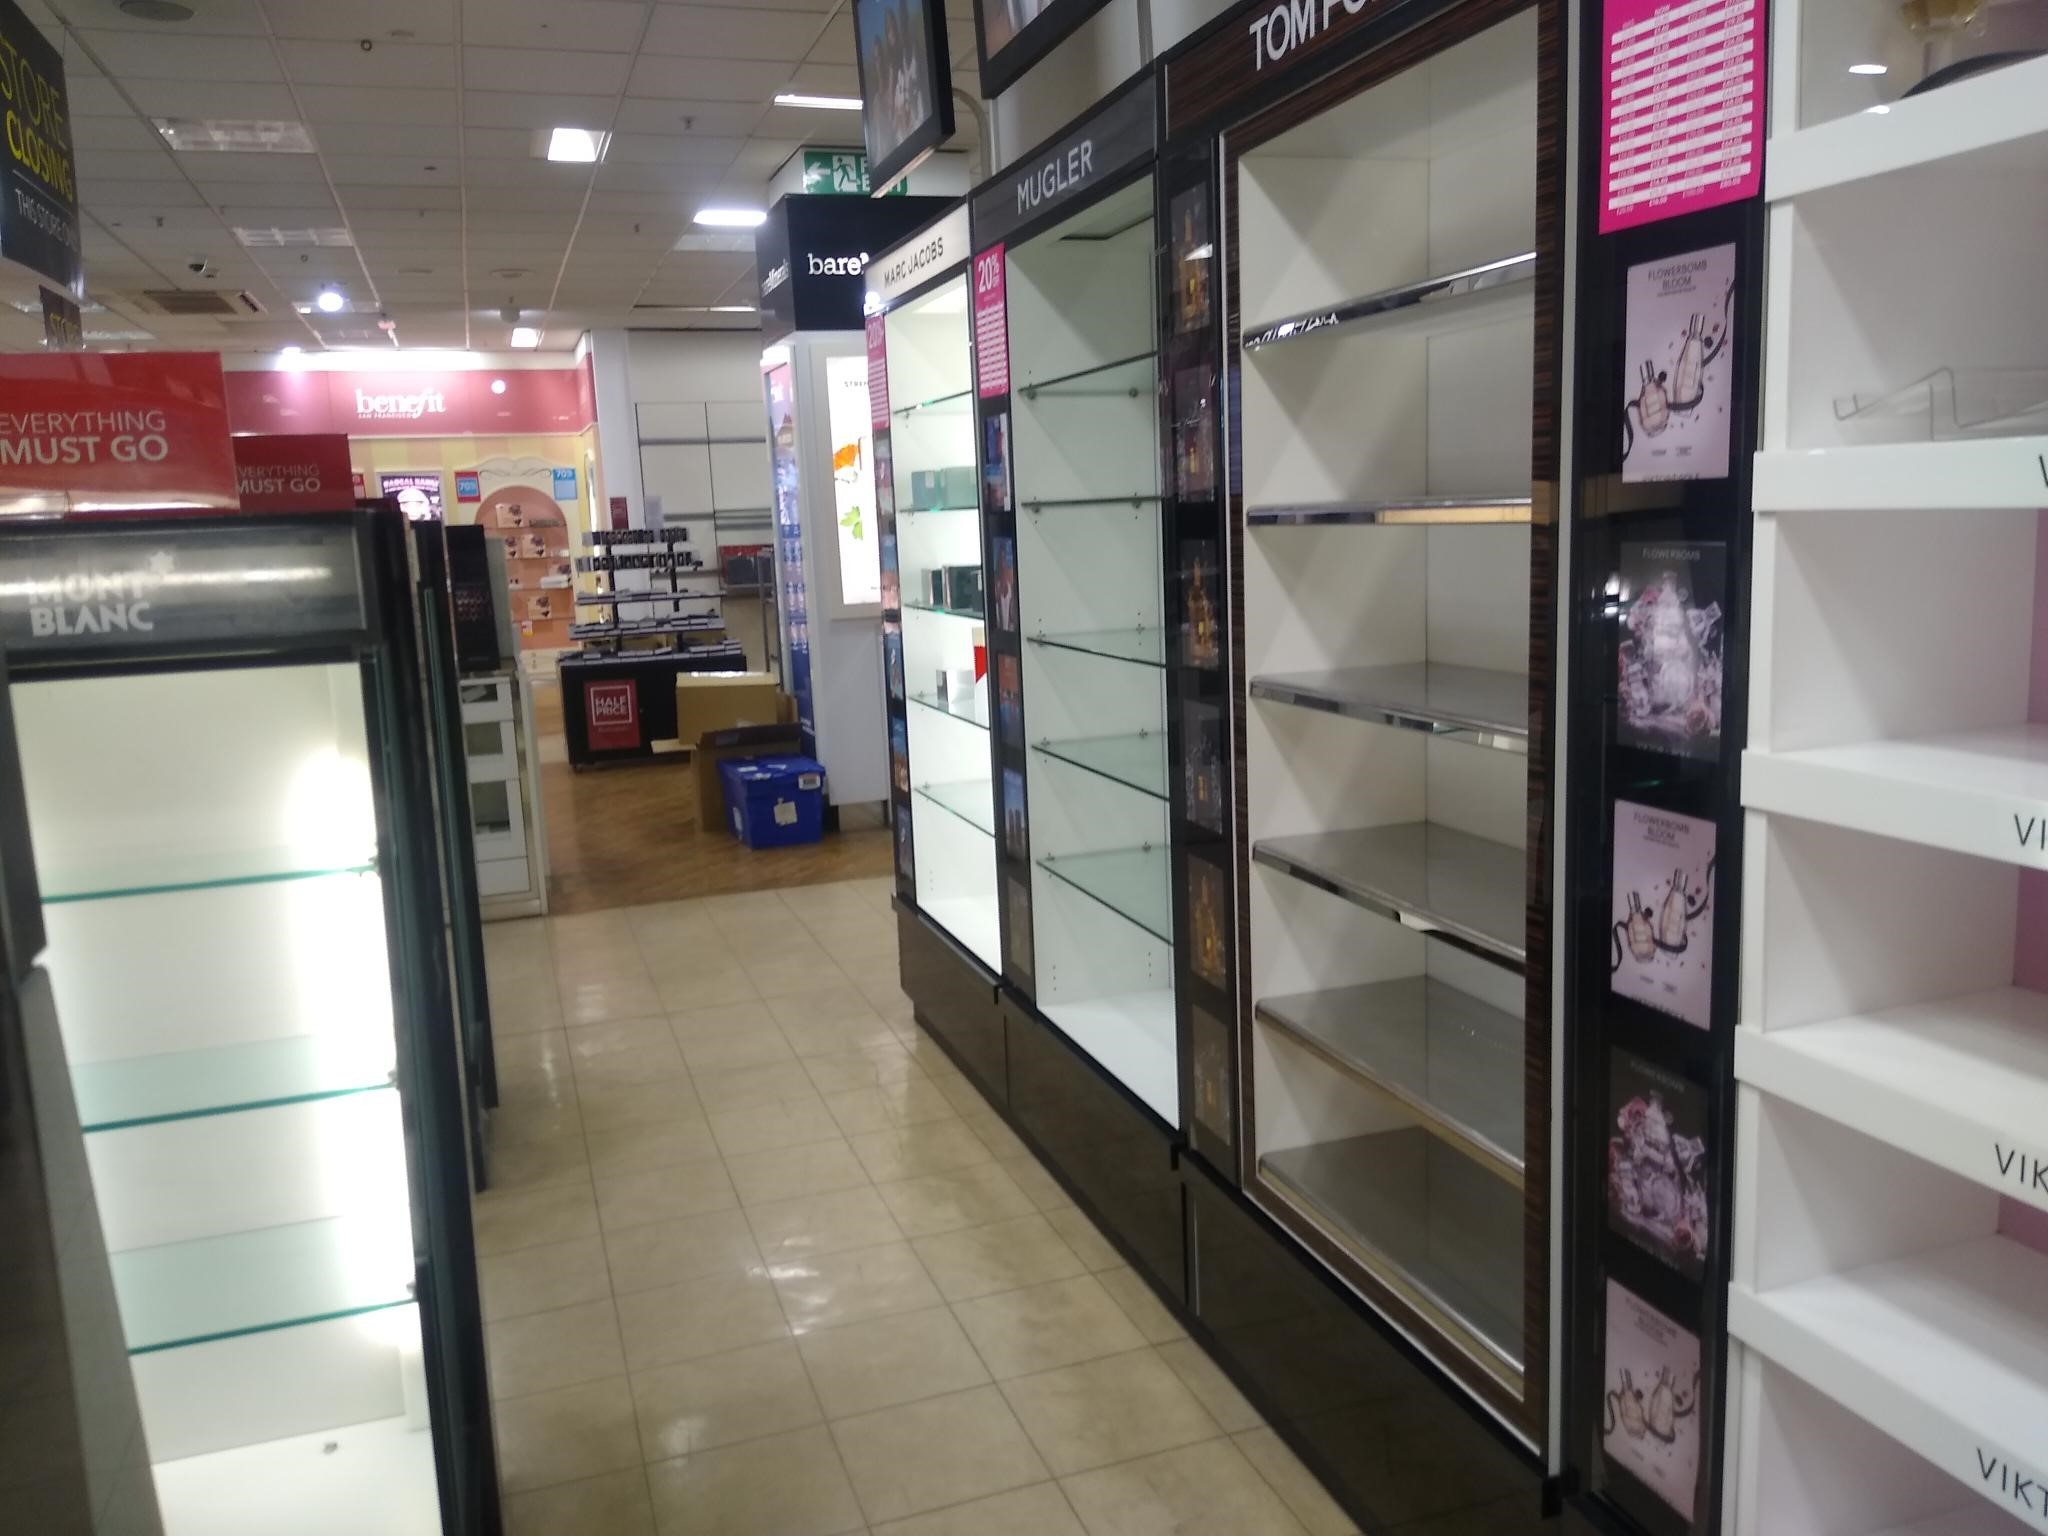 Empty shelves at Debenhams